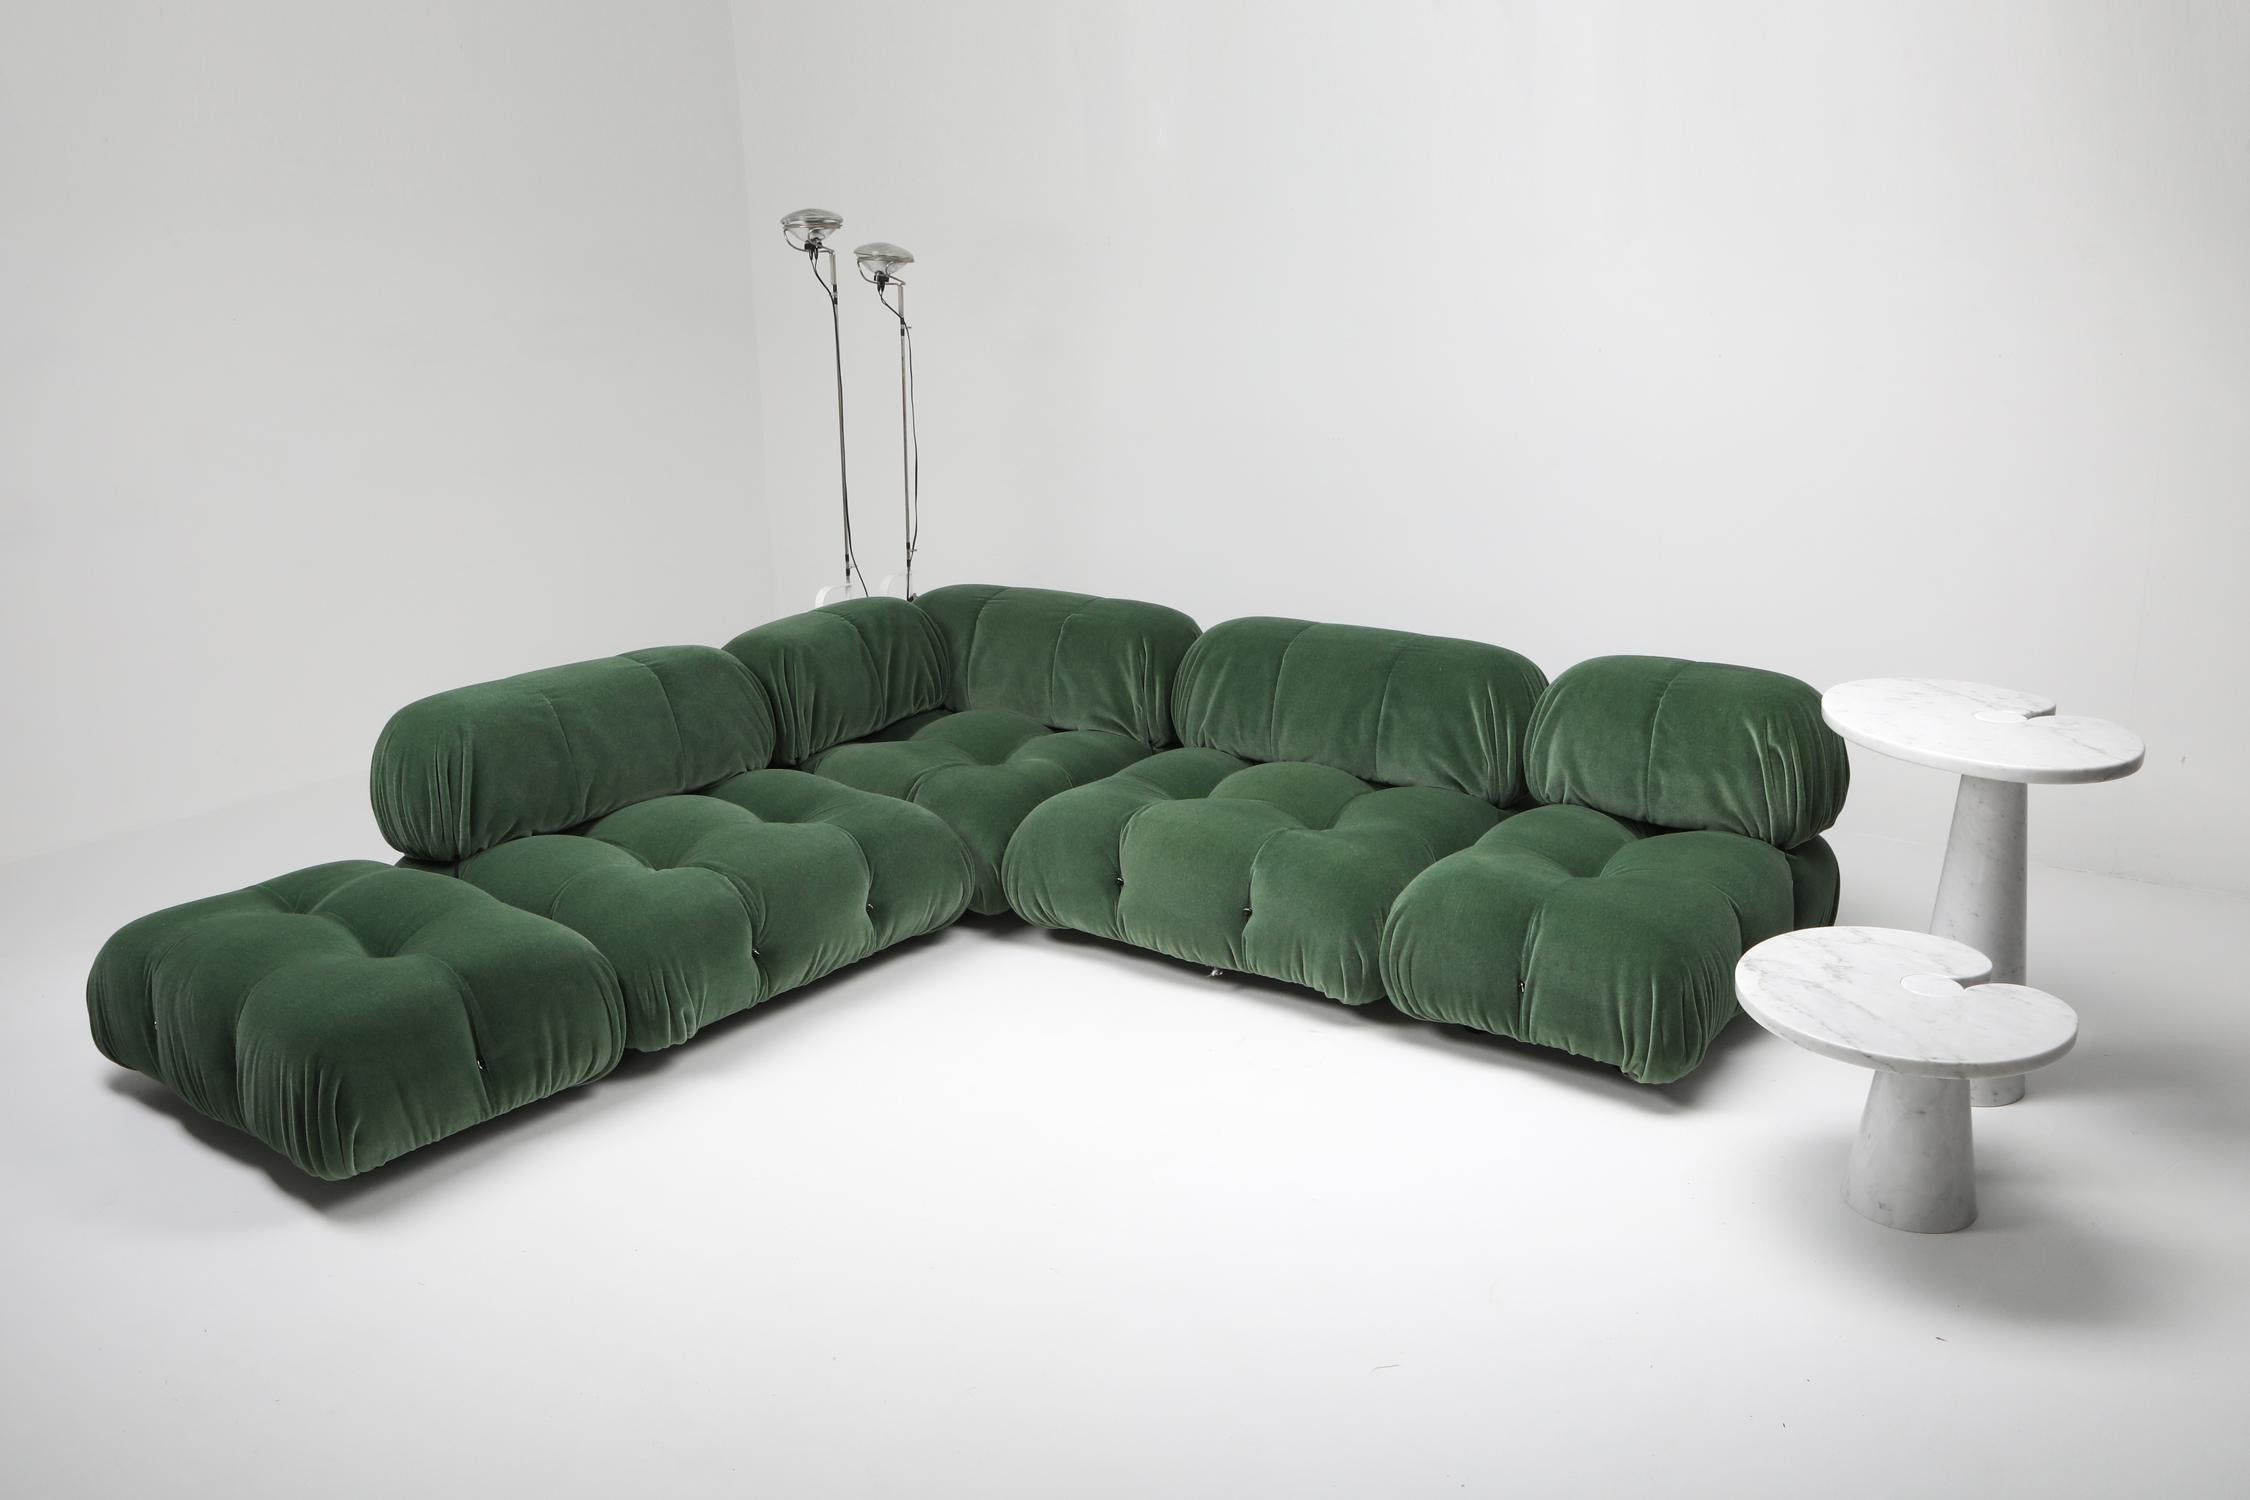 European Mario Bellini Camaleonda Lounge Chair in Pierre Frey Mohair, Italian design For Sale